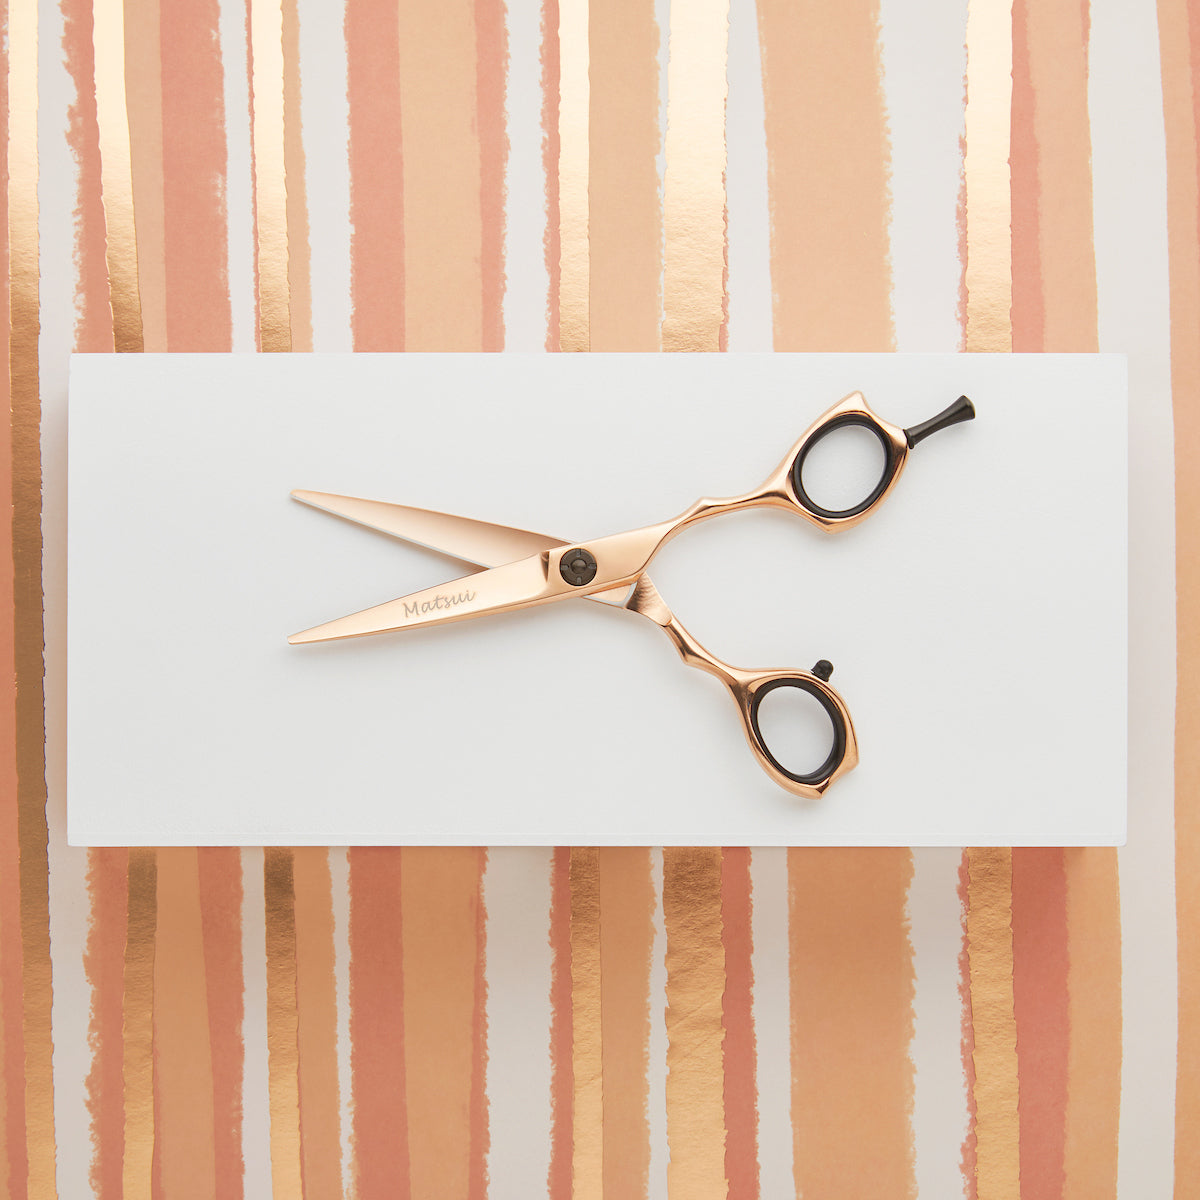 Premium Hairdressing Shears, Matsui Precision Rose Gold Salon shears (6745039142978)